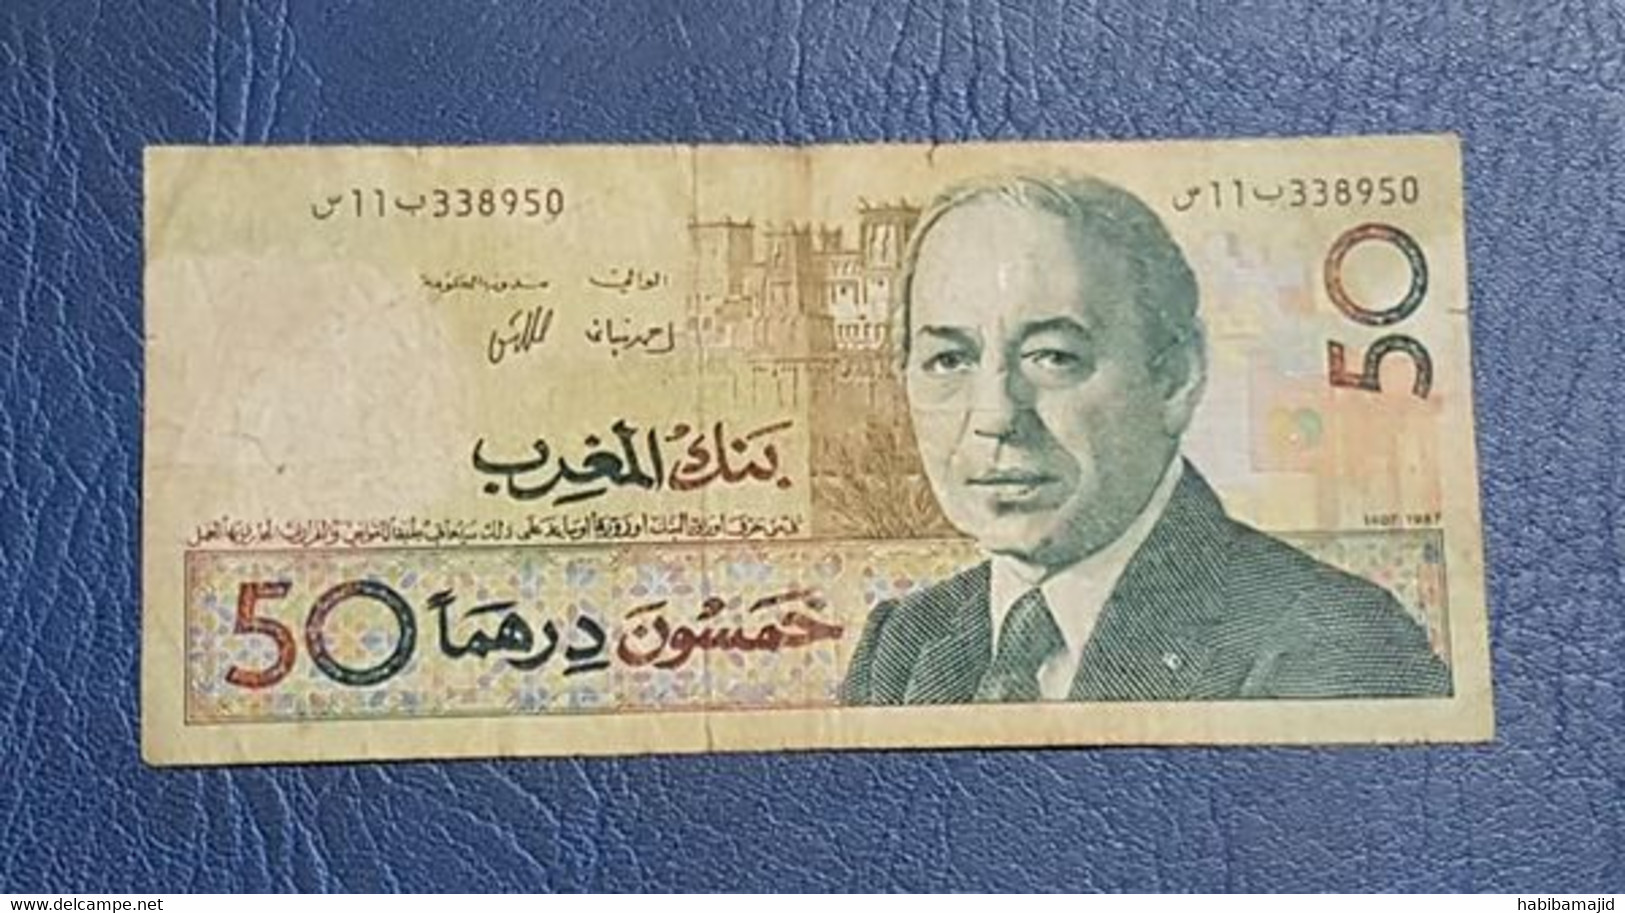 MAROC : "RARE" Billet De 50 Dhs FACE (Hassan II) 1987 "B" N° De Série : 11/338950 - 24 € Au Lieu De 28 € - Marocco